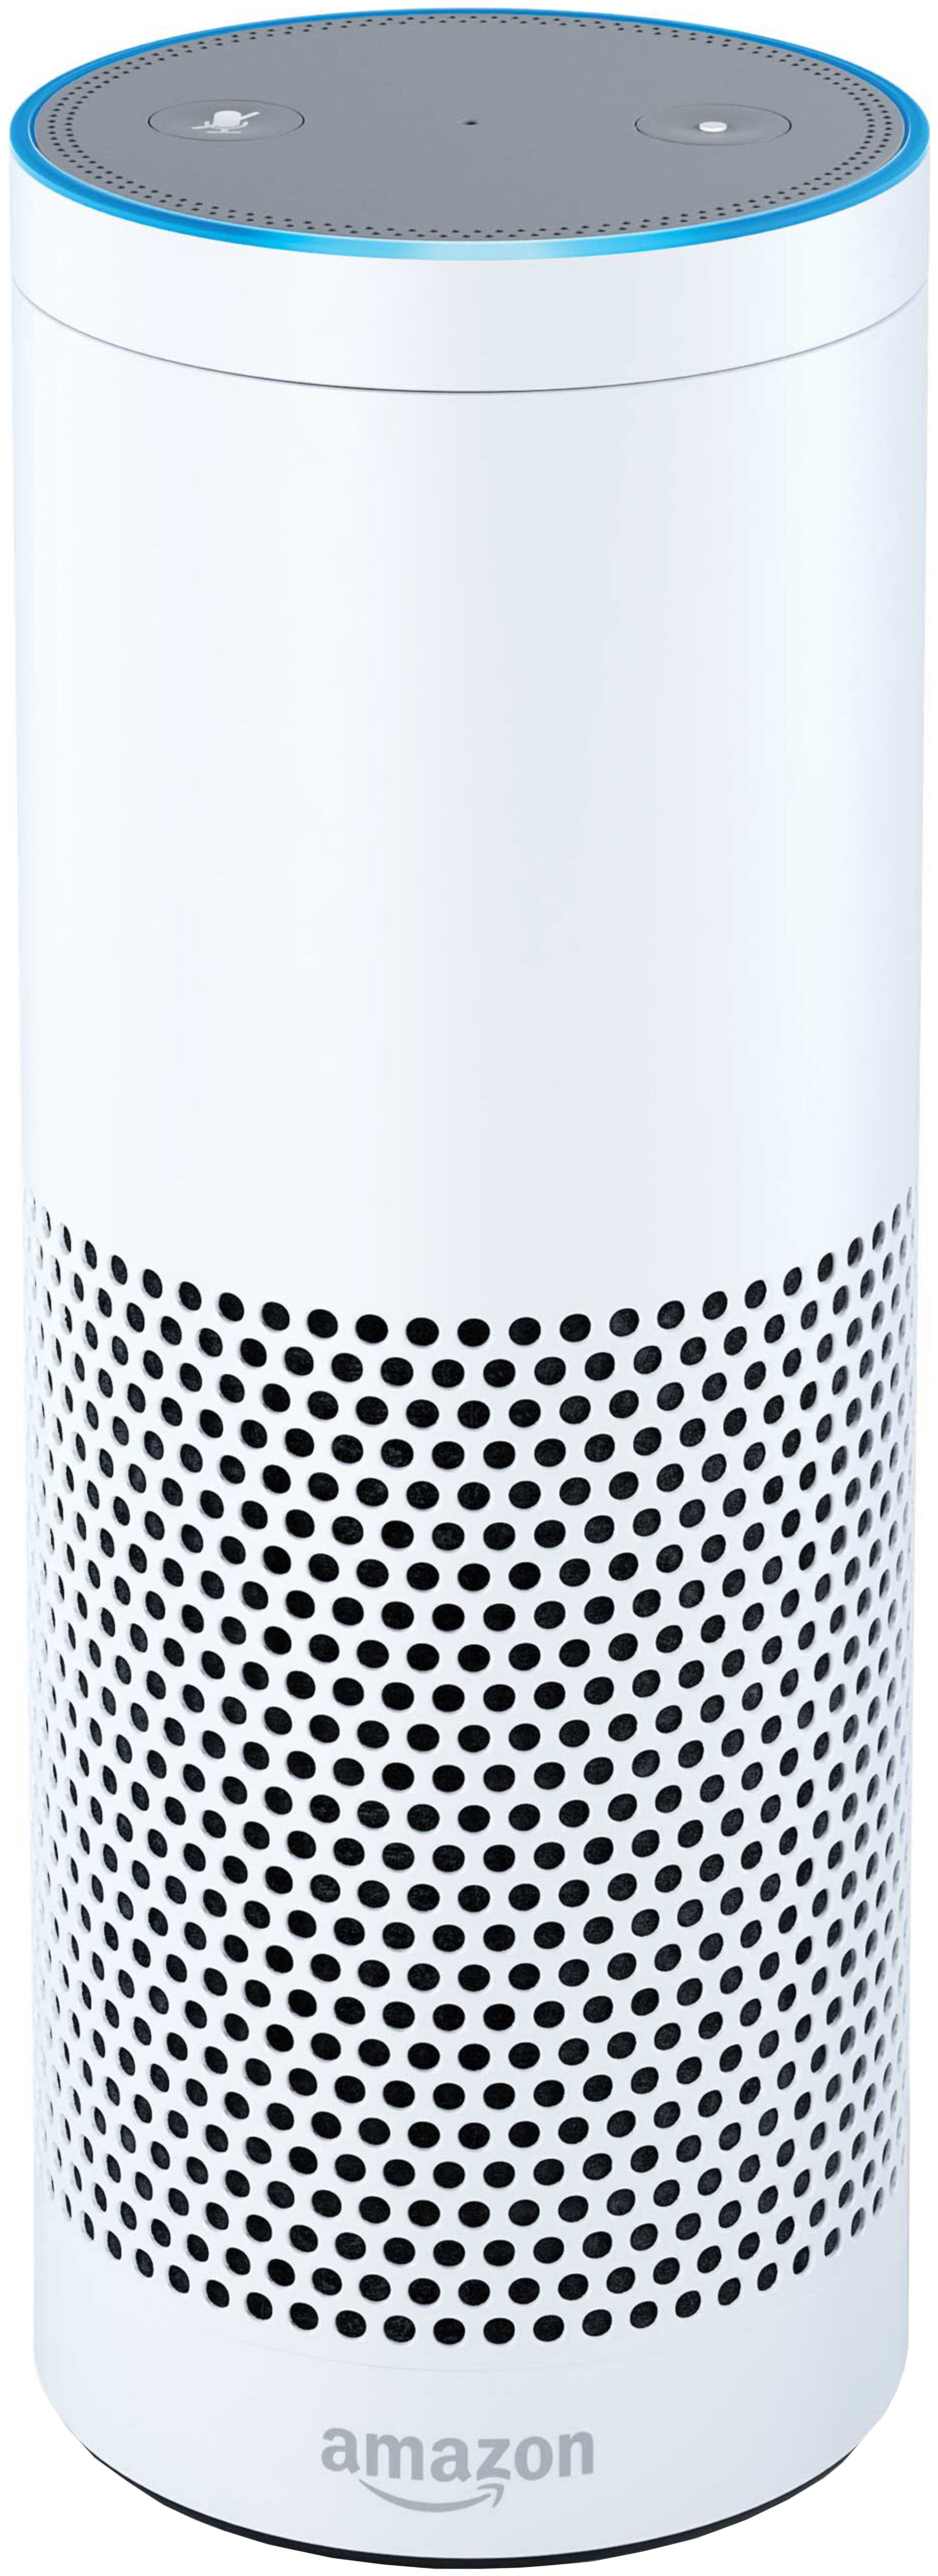 Amazon Echo Multimedia Speaker with Voice Control - White